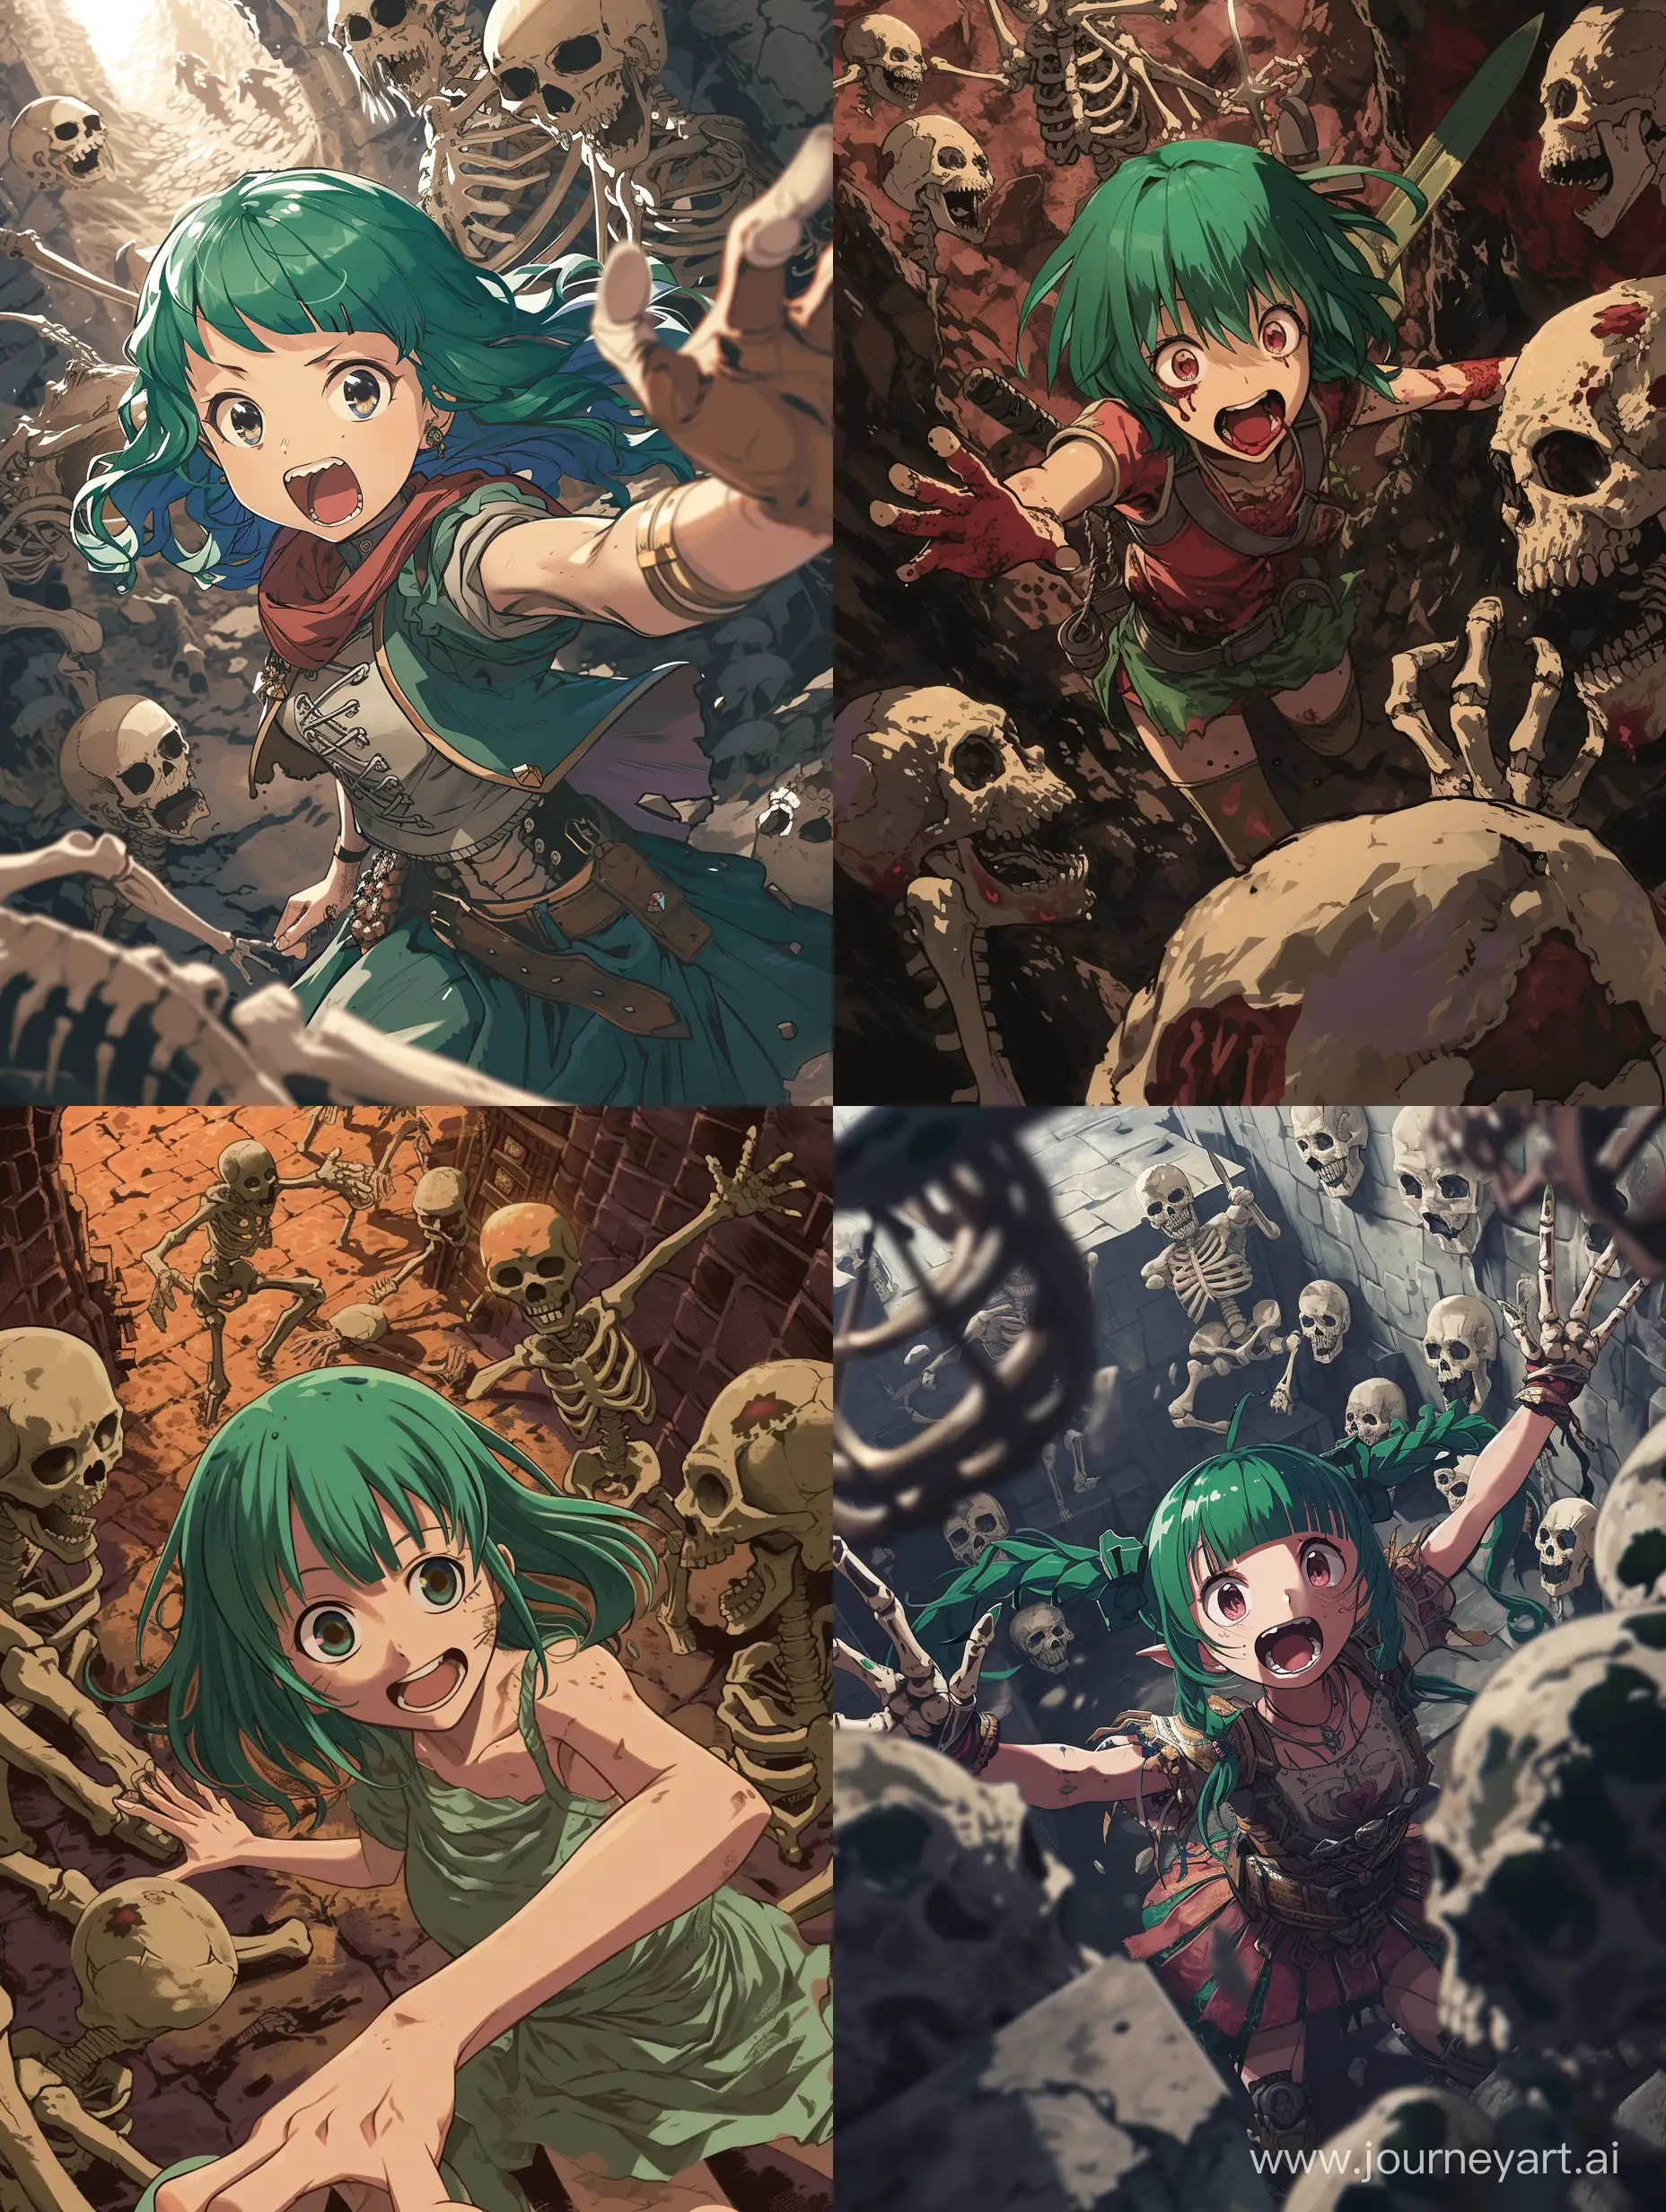 Courageous-GreenHaired-Anime-Girl-Battles-Skeleton-Horde-in-Dark-Dungeon